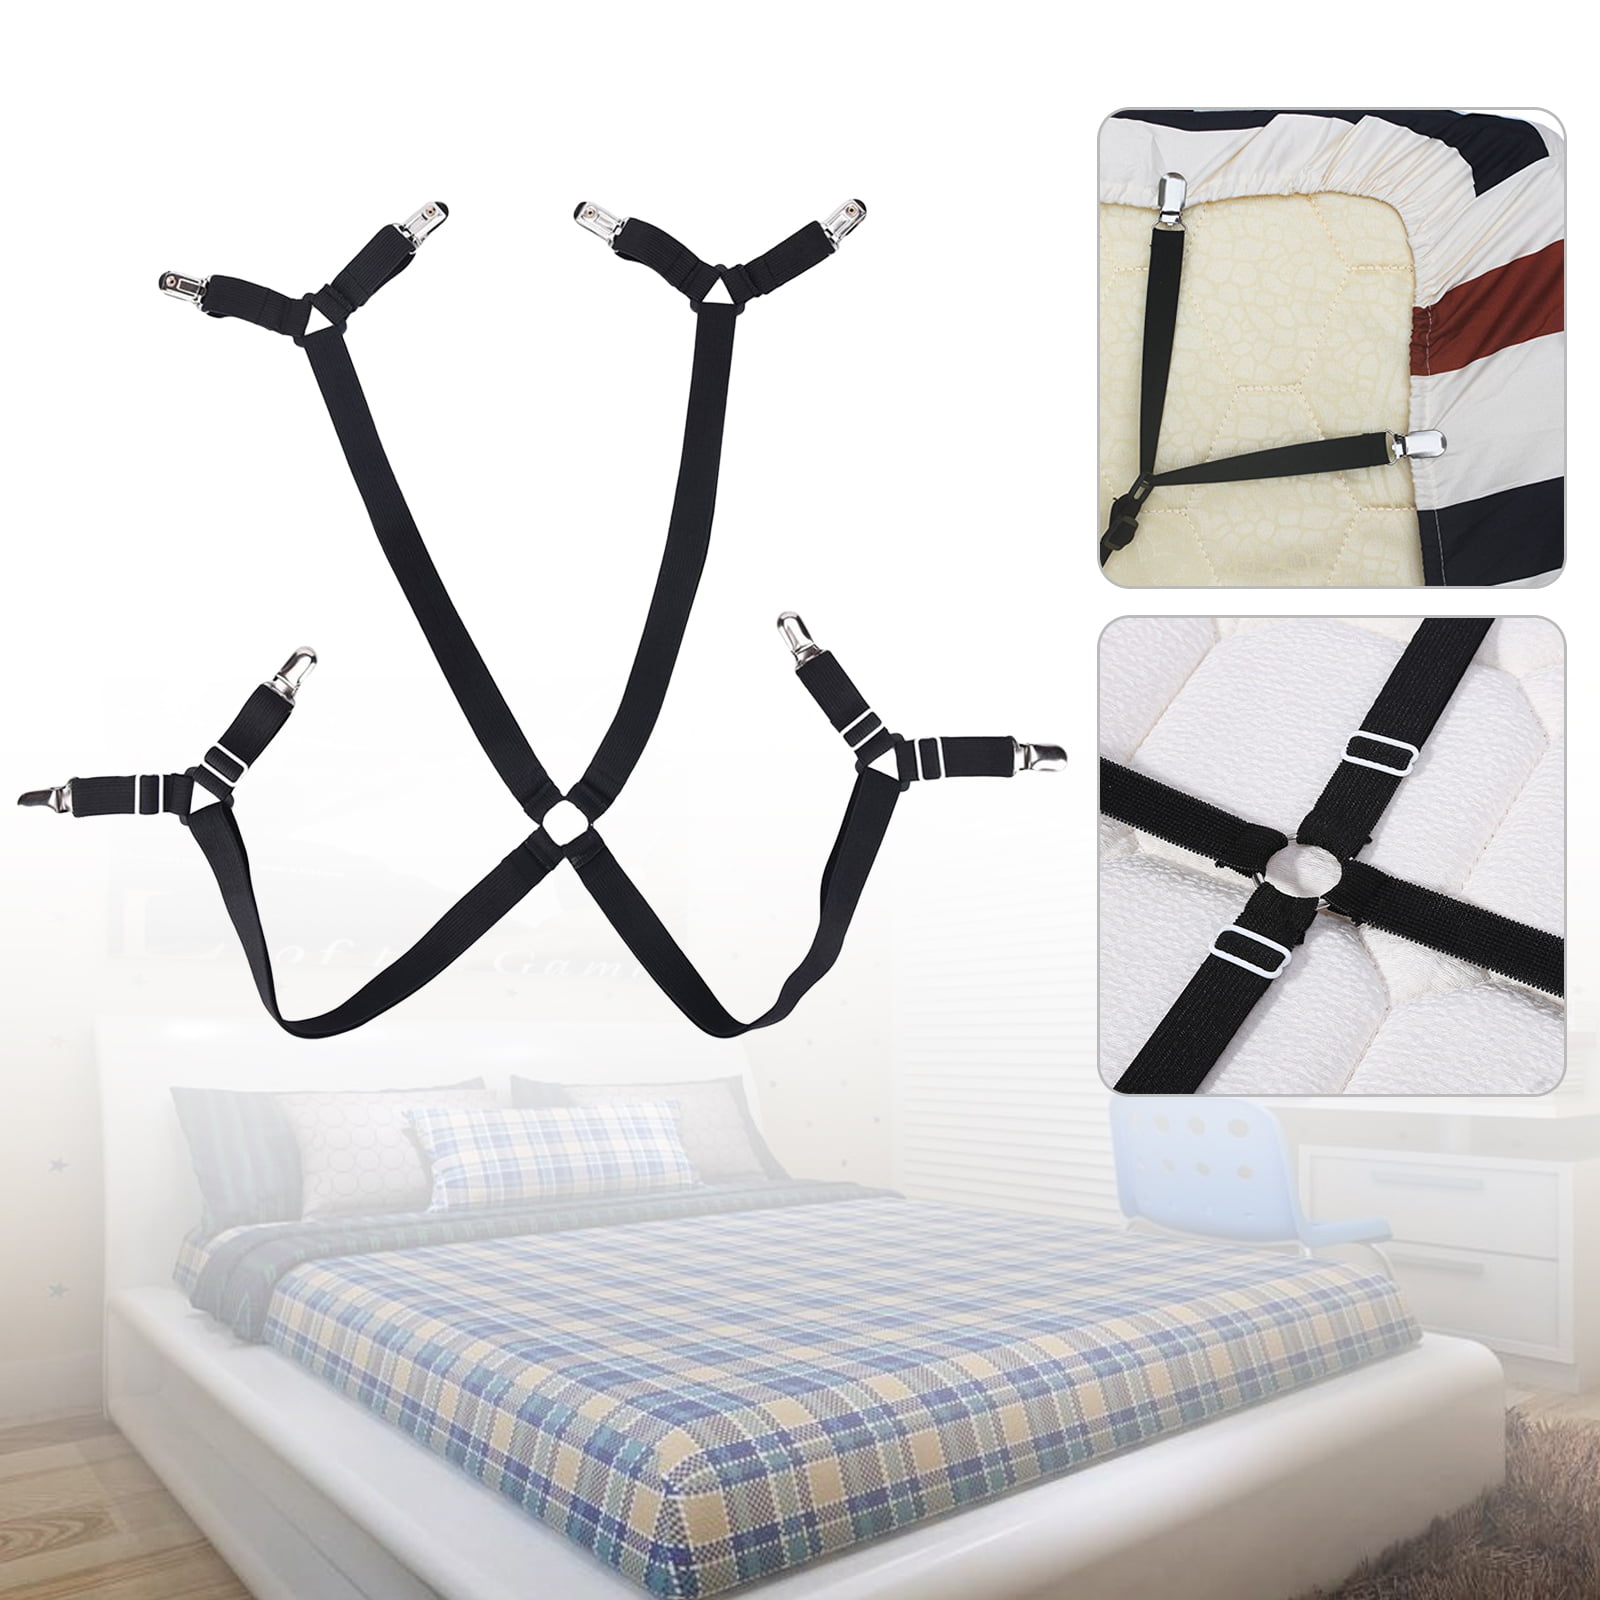 Elastic Bed Buckle Sheet Straps Clips Adjustable Grippers Straps Suspender TOP 